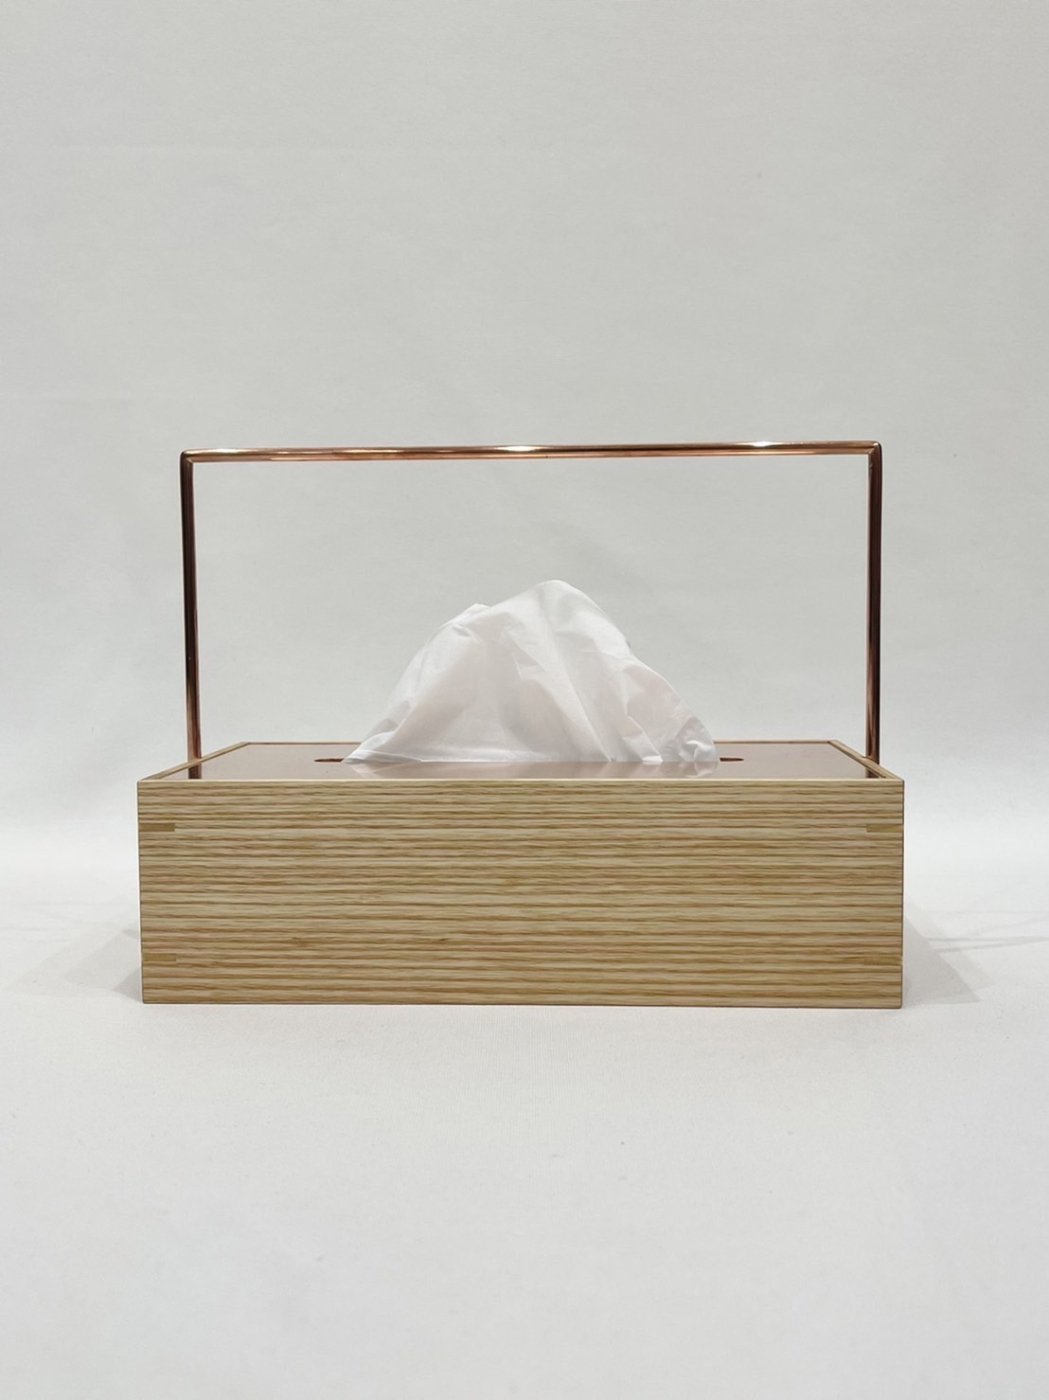 SANTASS&#201; "TISSUE BOX" for Noguchi